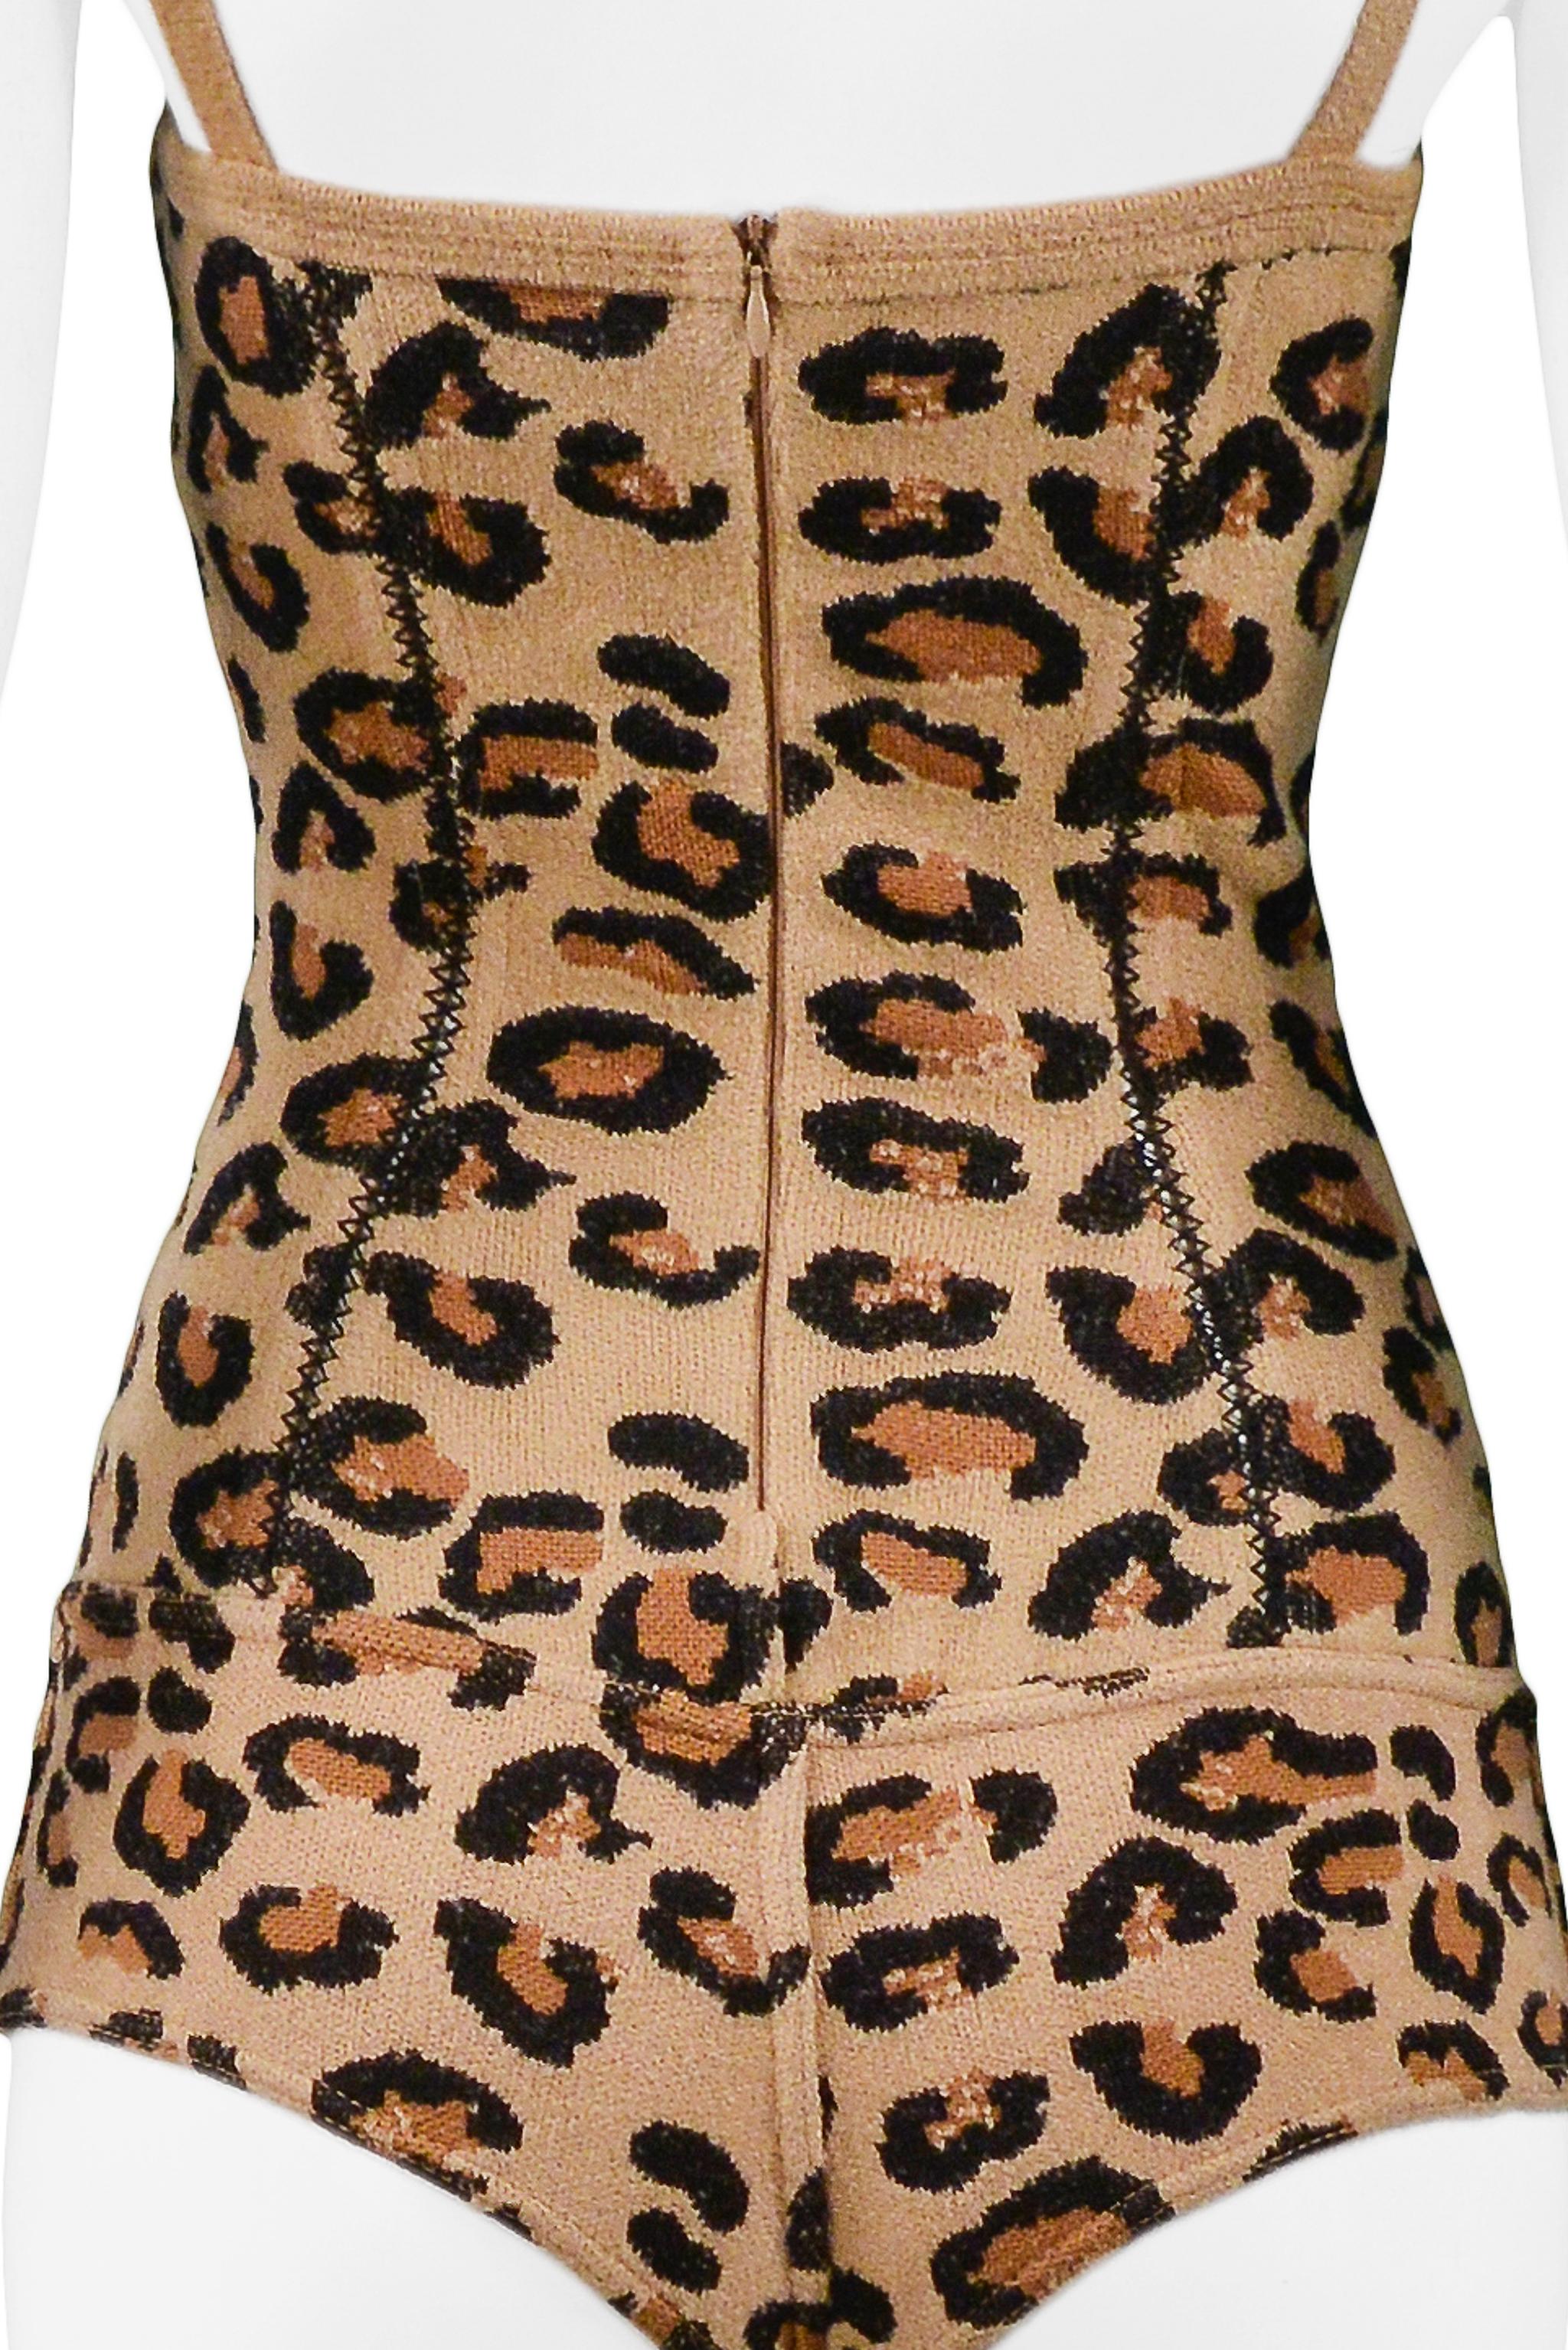 Iconic Vintage Azzedine Alaia Leopard Bodysuit   1991 Runway Collection  1